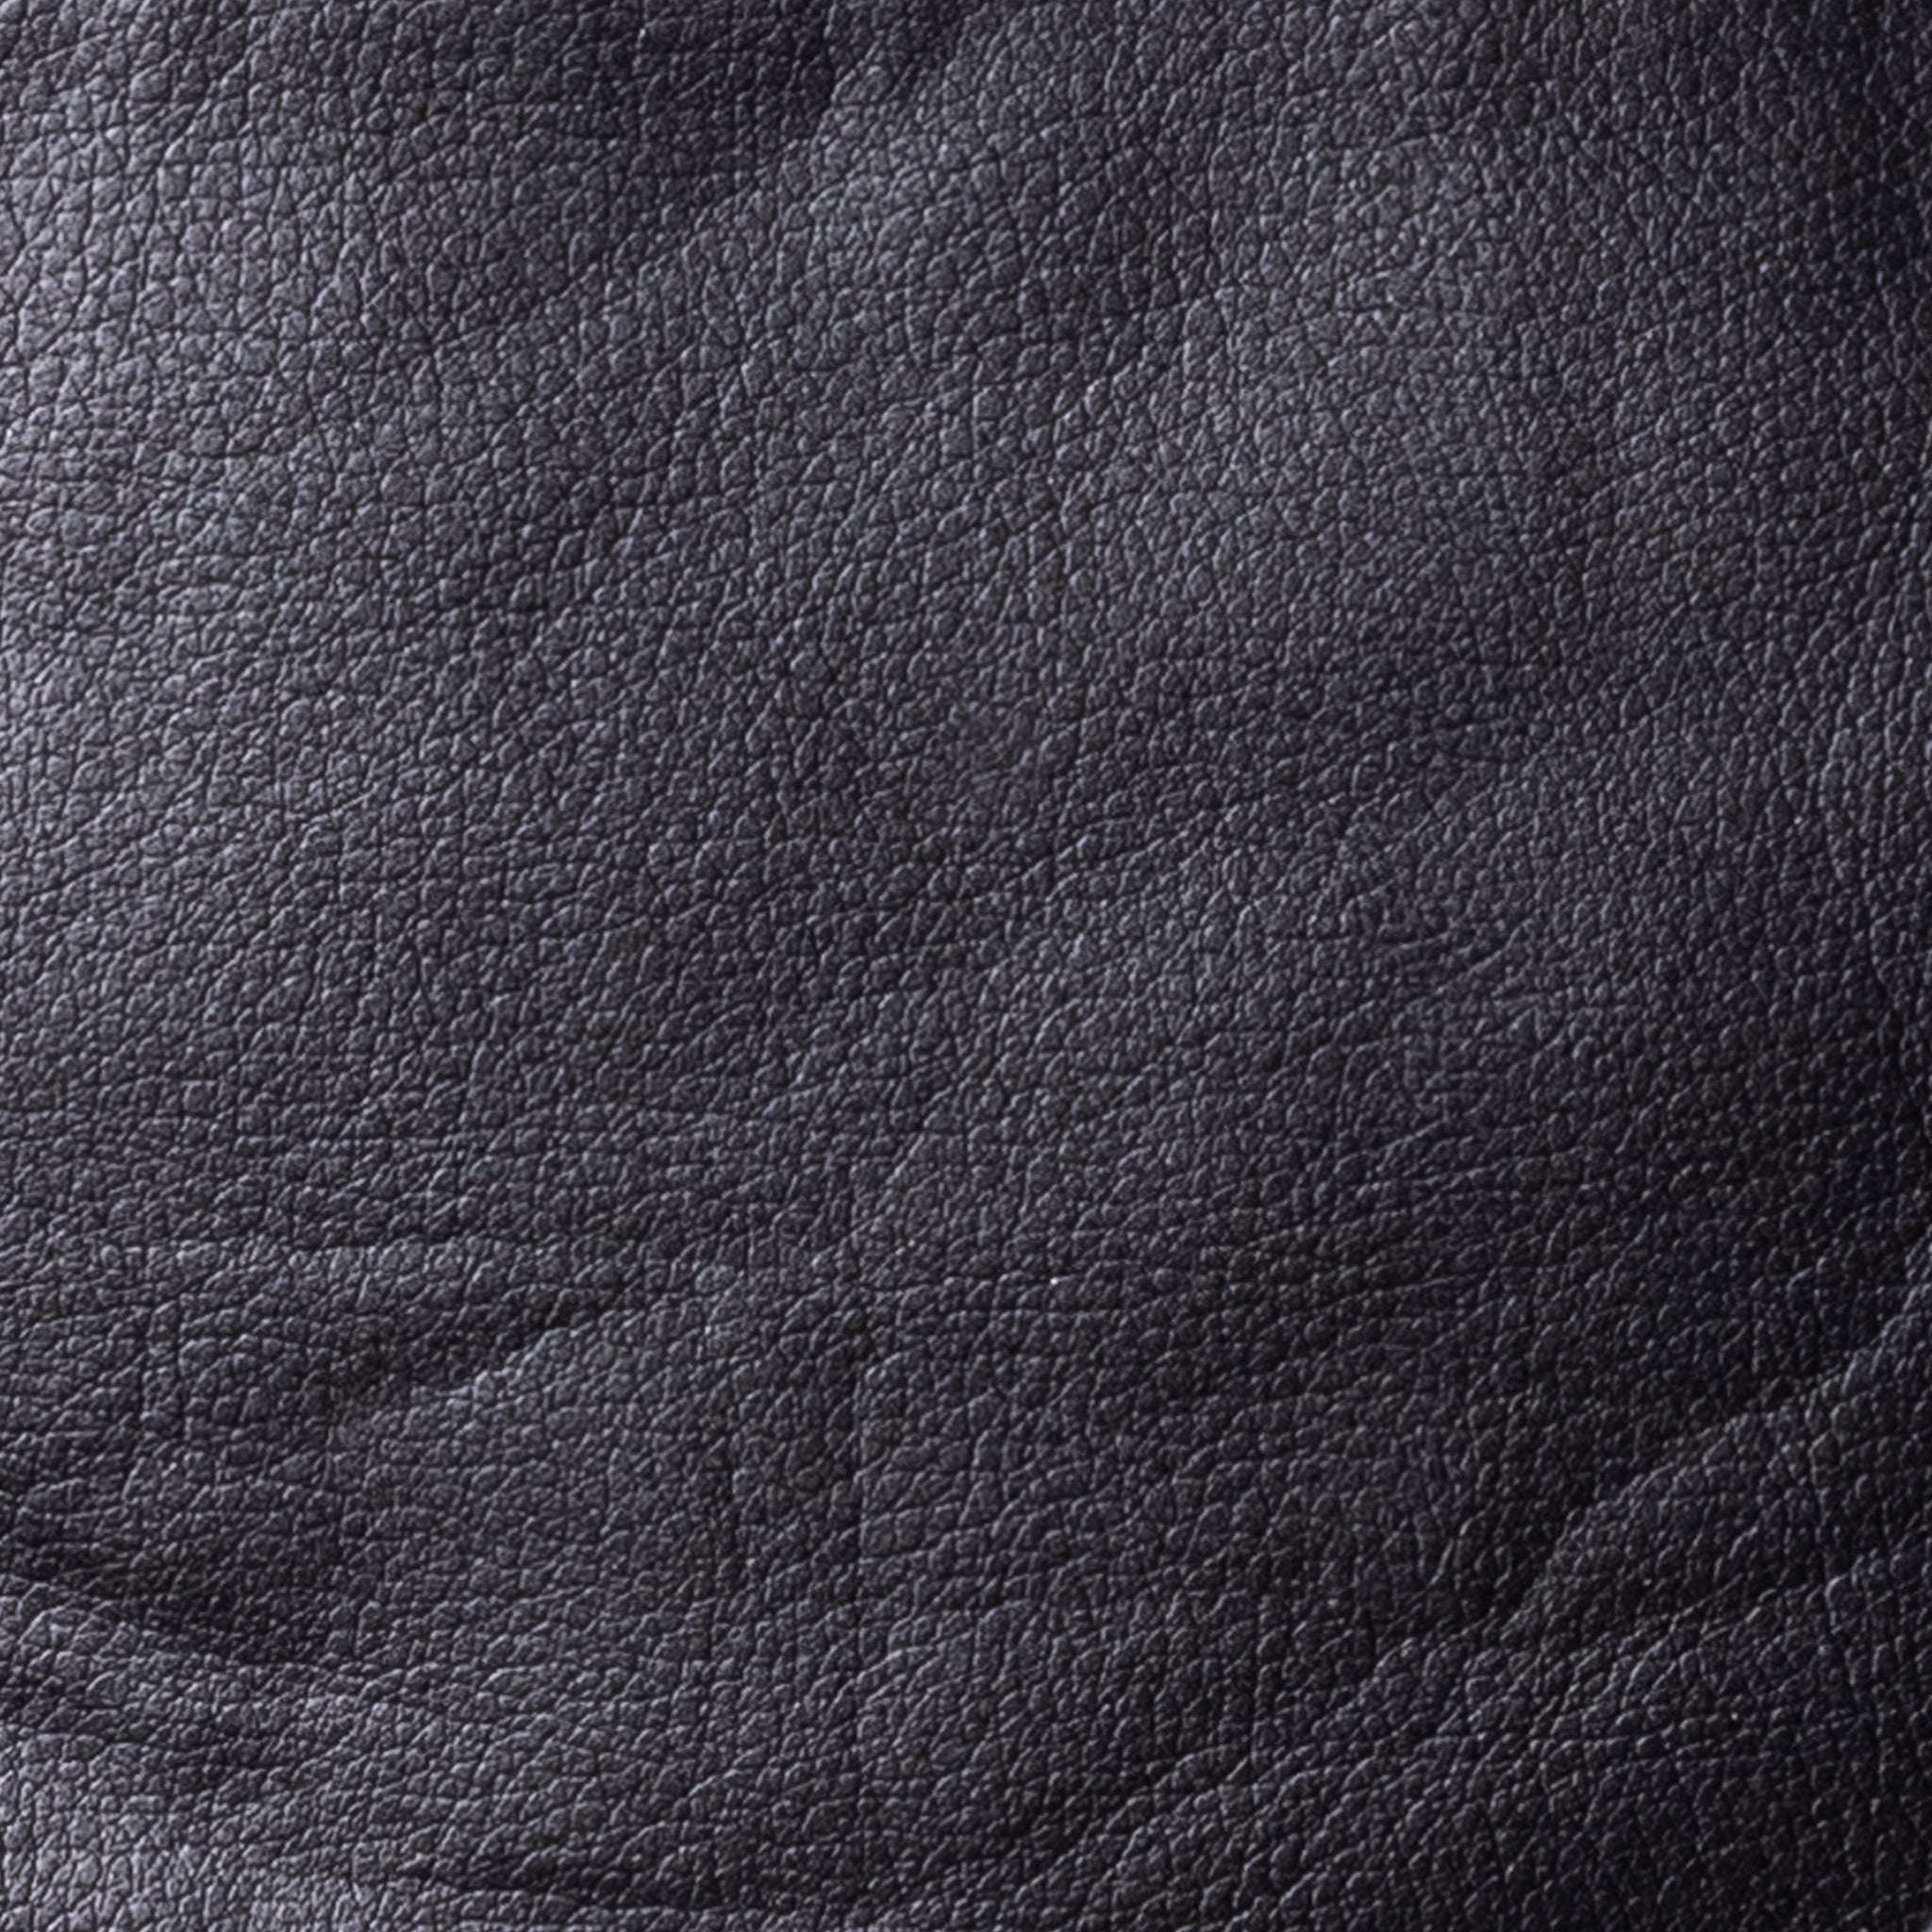 Texture of Pinatex Crossbody Handbag in Black by Duffle&Co